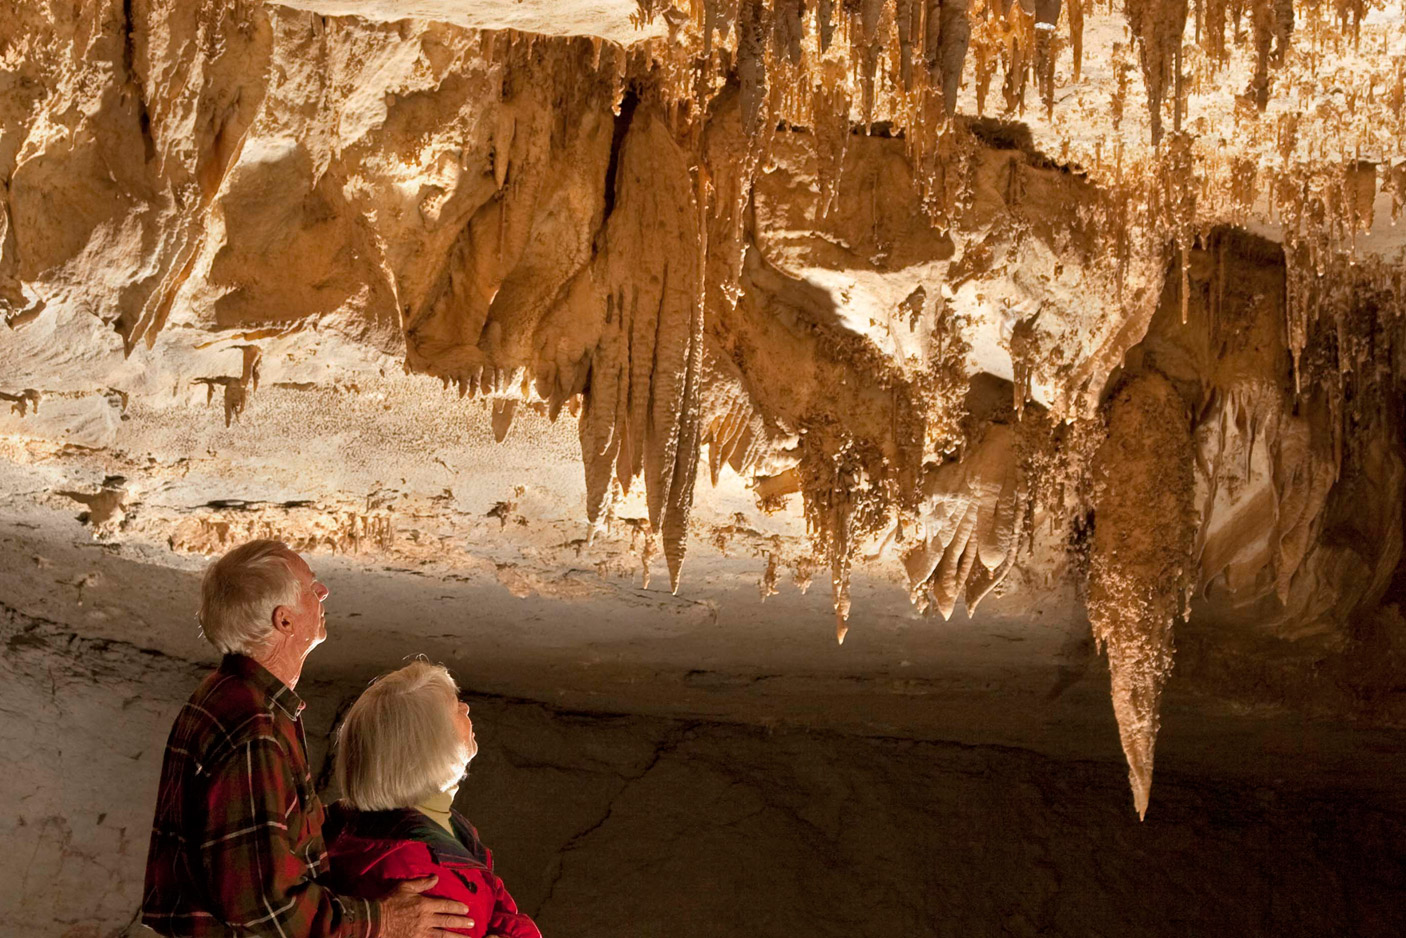 Couple looking up at Cumberland Caverns, TN